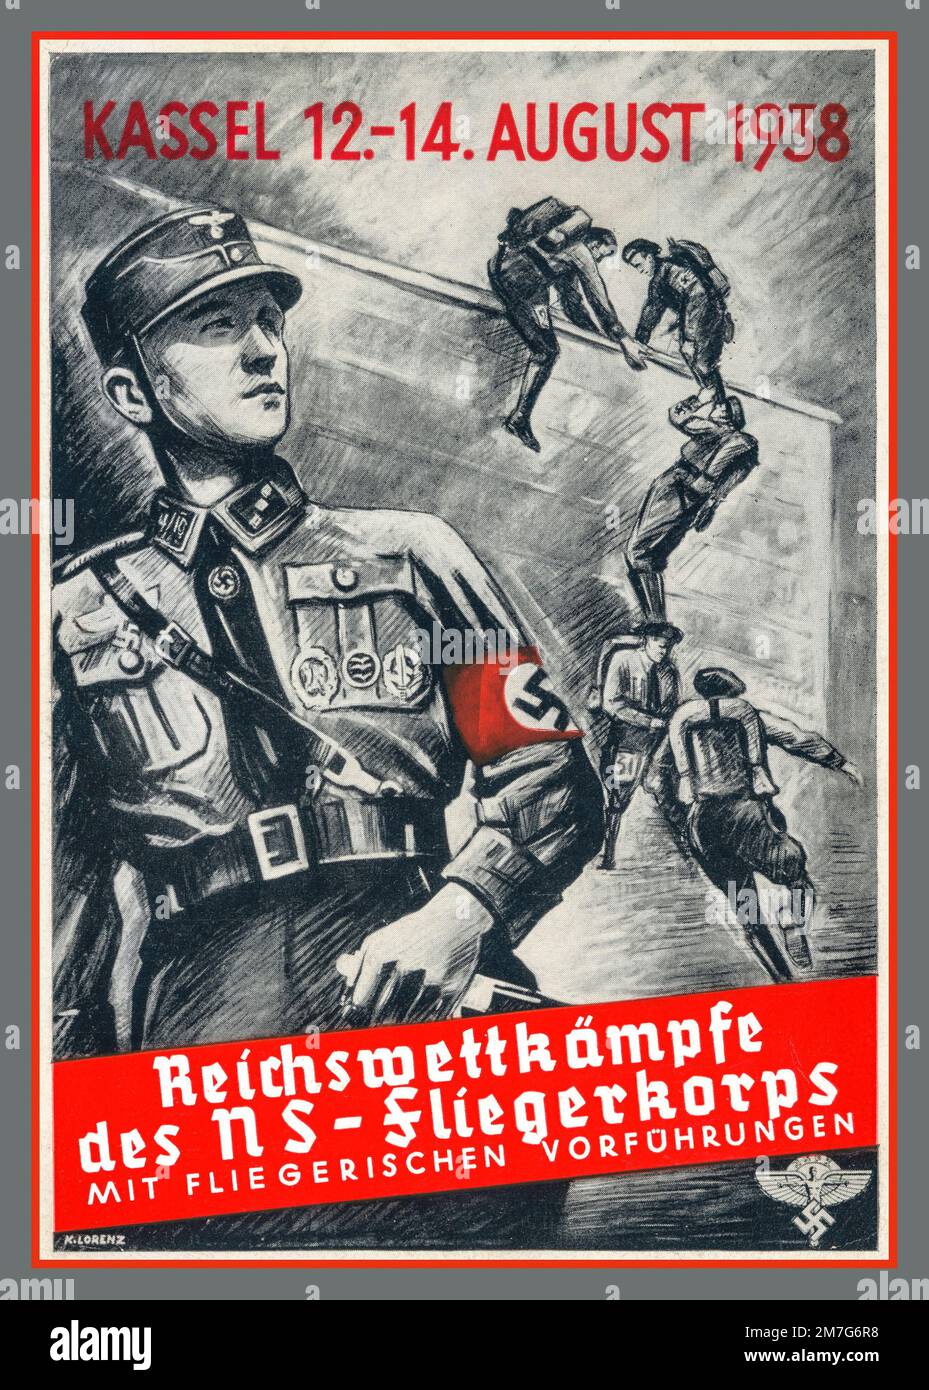 Nazis NS-FLIEGERKORPS recrutement recrutement recrutement affiche nazie 1938 Allemagne nazie 'mit fliegerischen vorfuhrungen' 'avec des manifestations volantes' 'concours empire' Reichswettkämpfe Banque D'Images